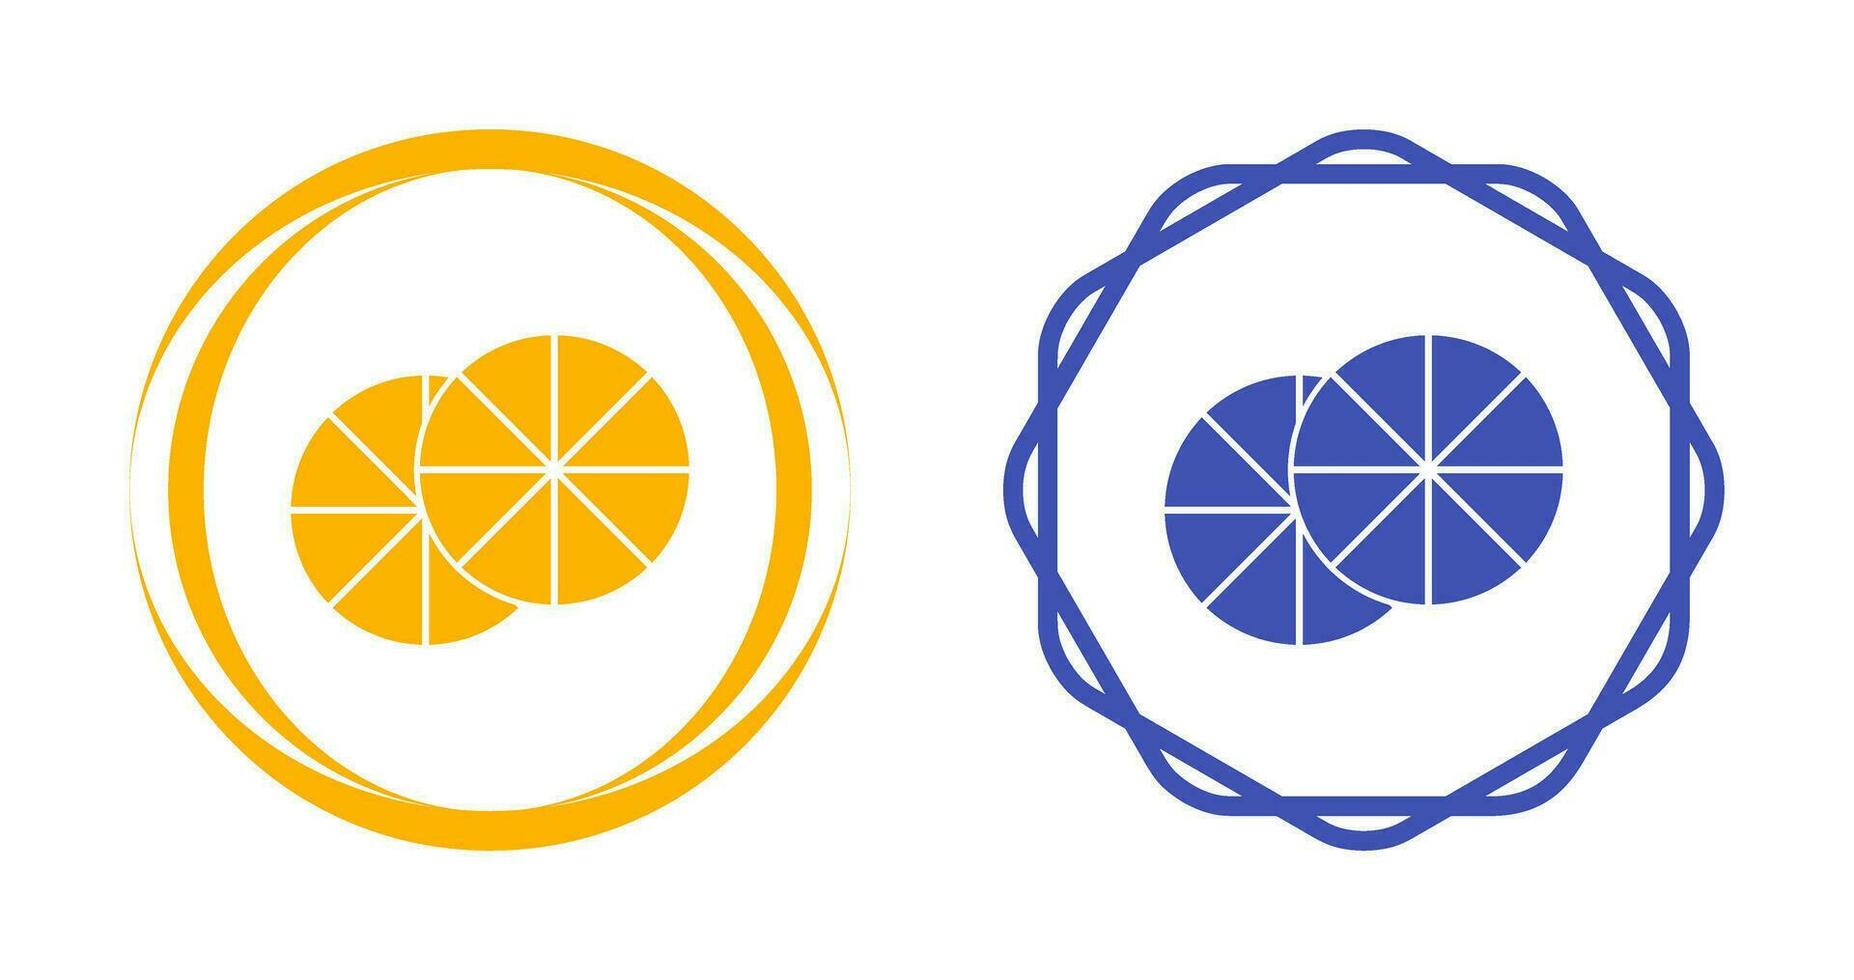 Orange Vector Icon